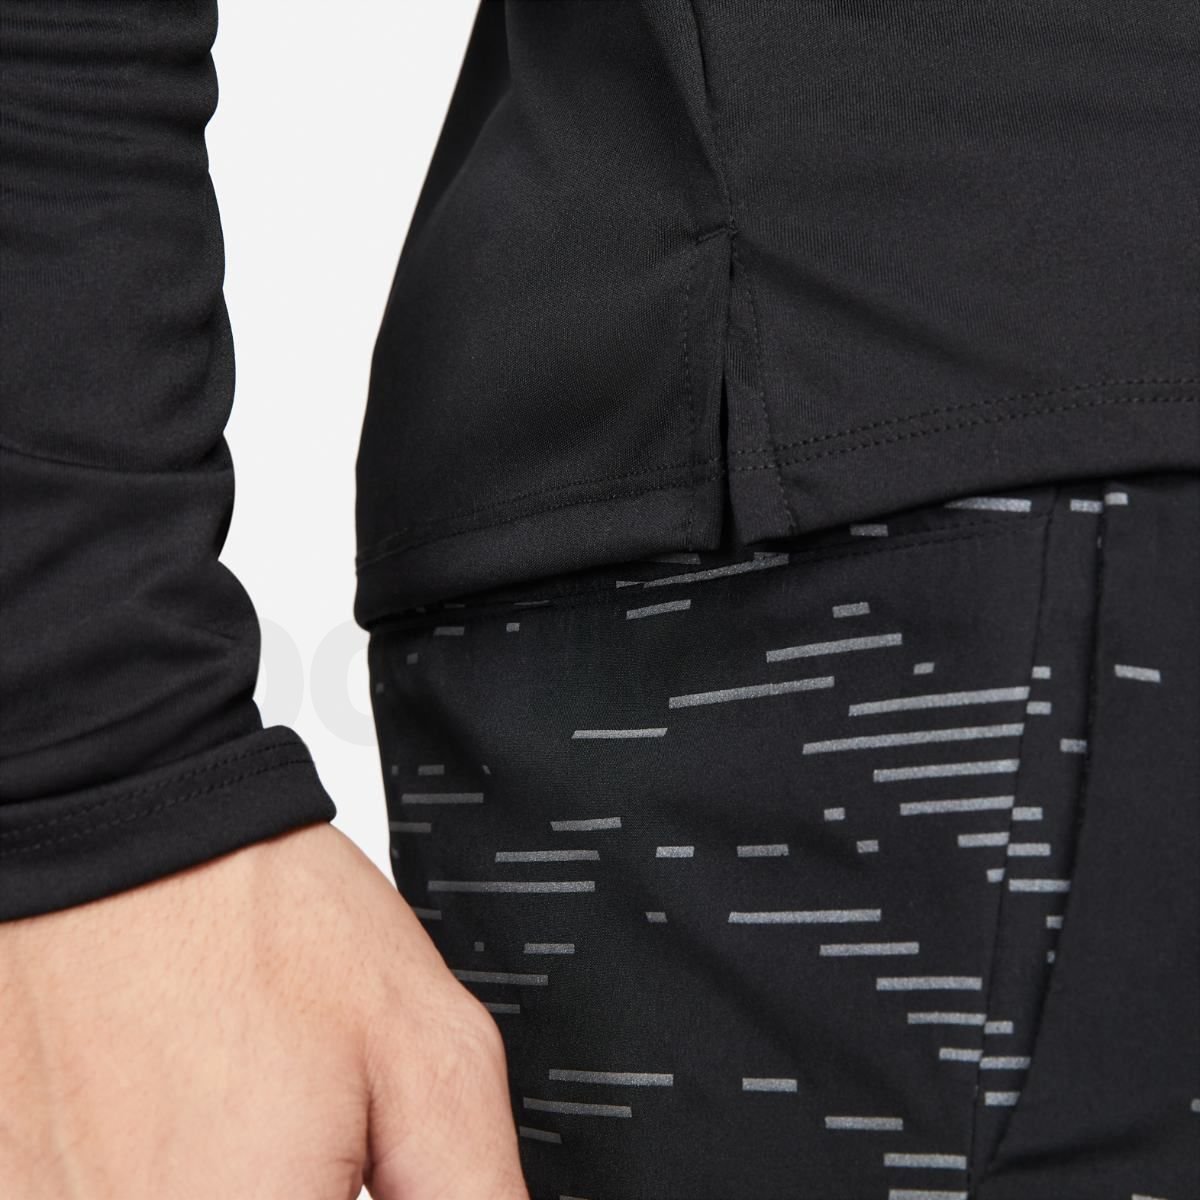 Tričko Nike Dri-FIT UV RUN DIVISION MILER M - černá